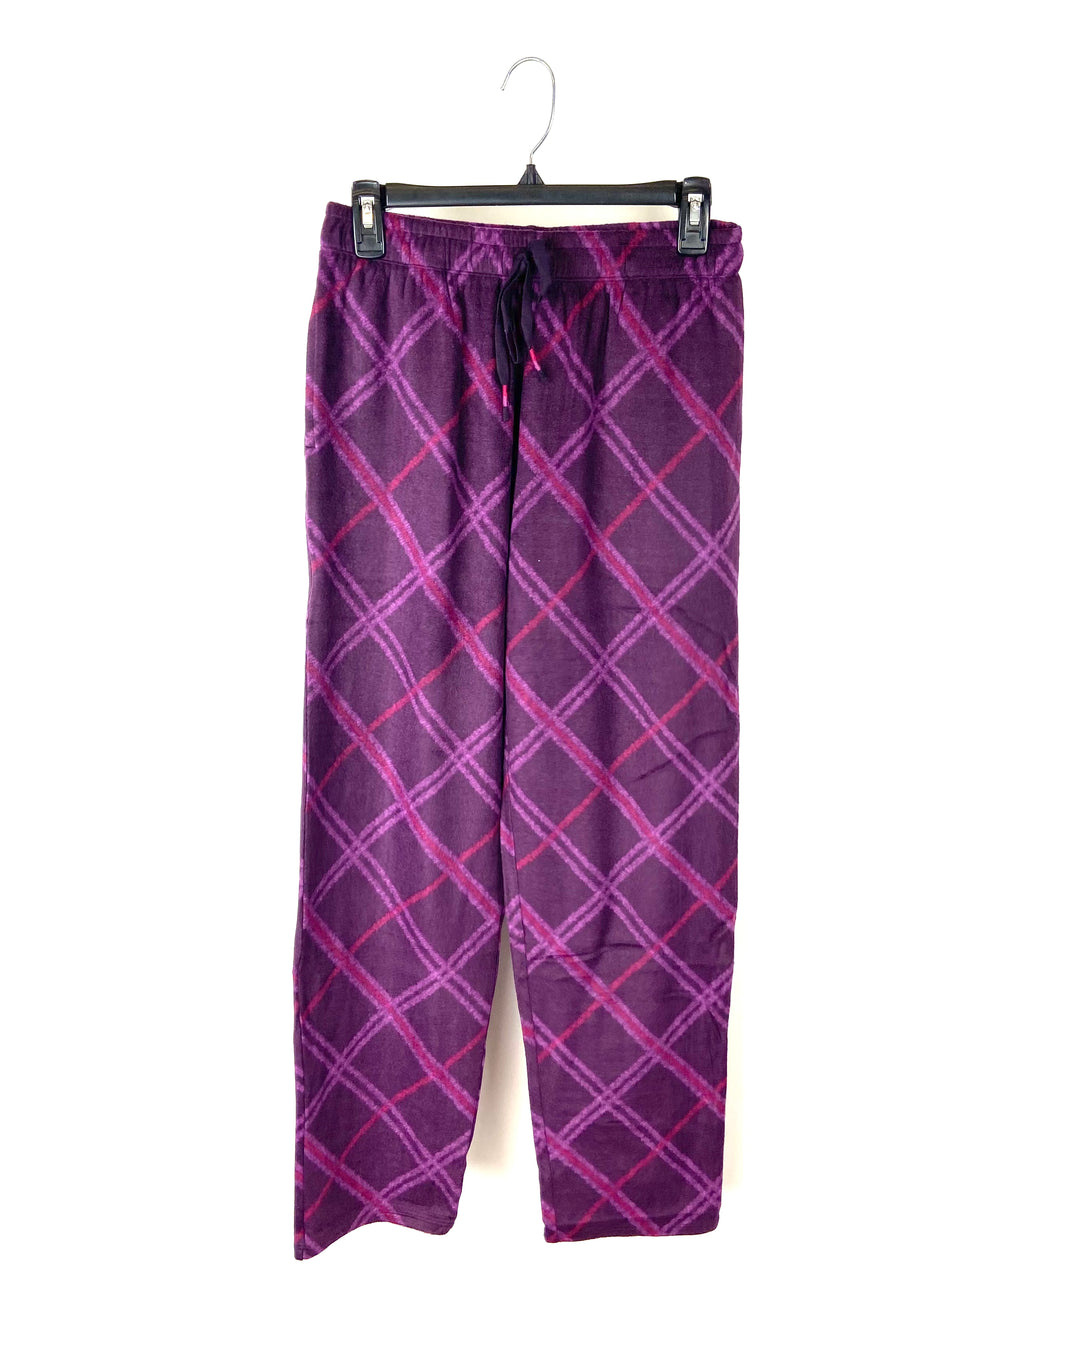 Purple Plaid Pajama Pants - Small